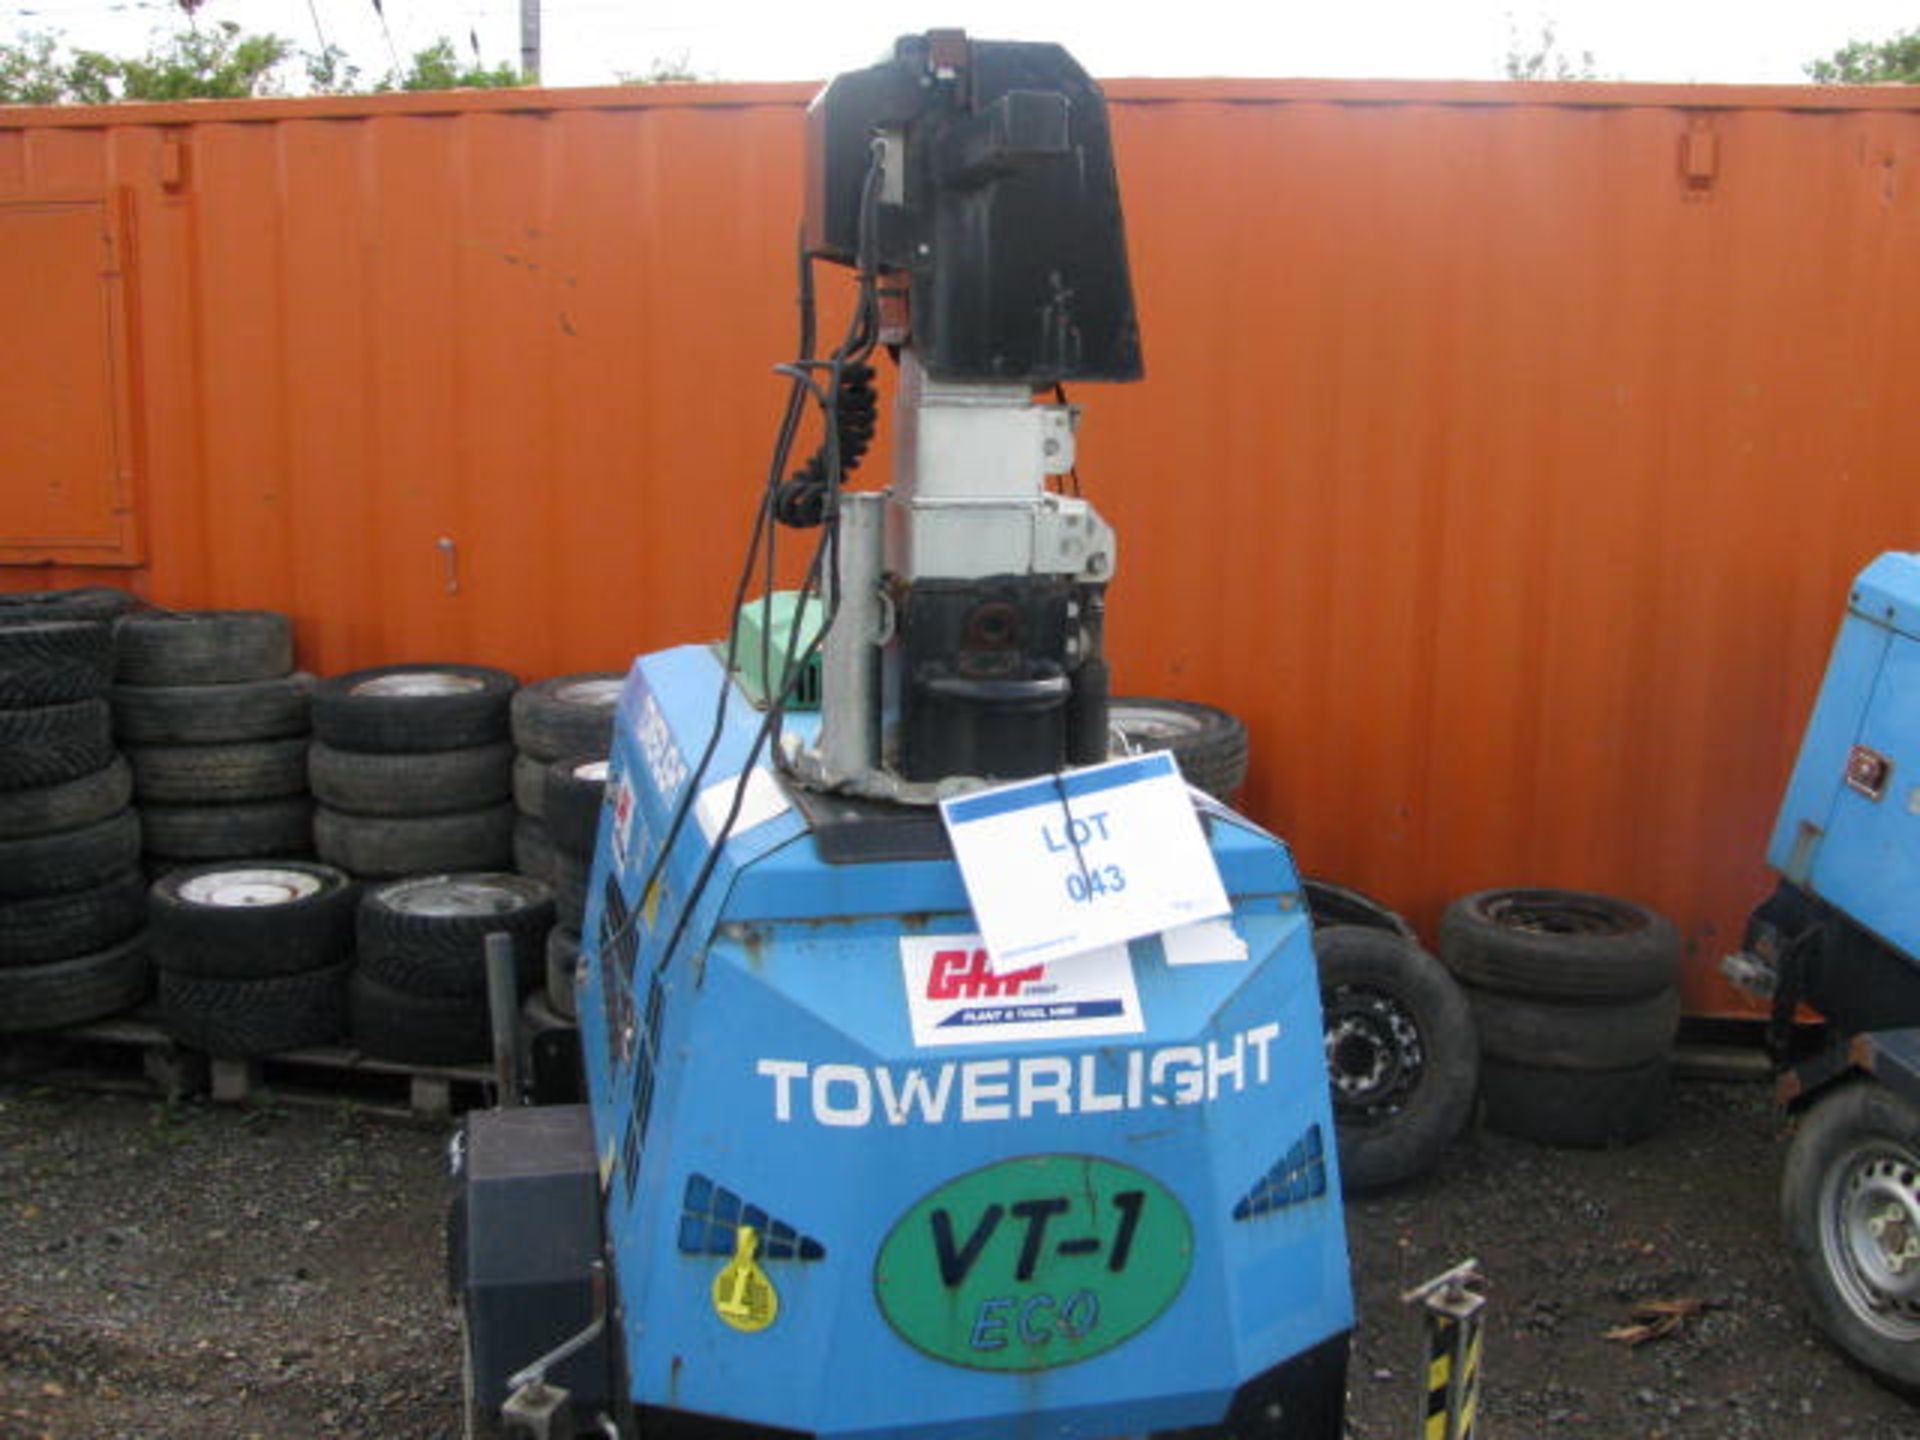 Towerlight Superlight VT1 diesel powered lighting tower